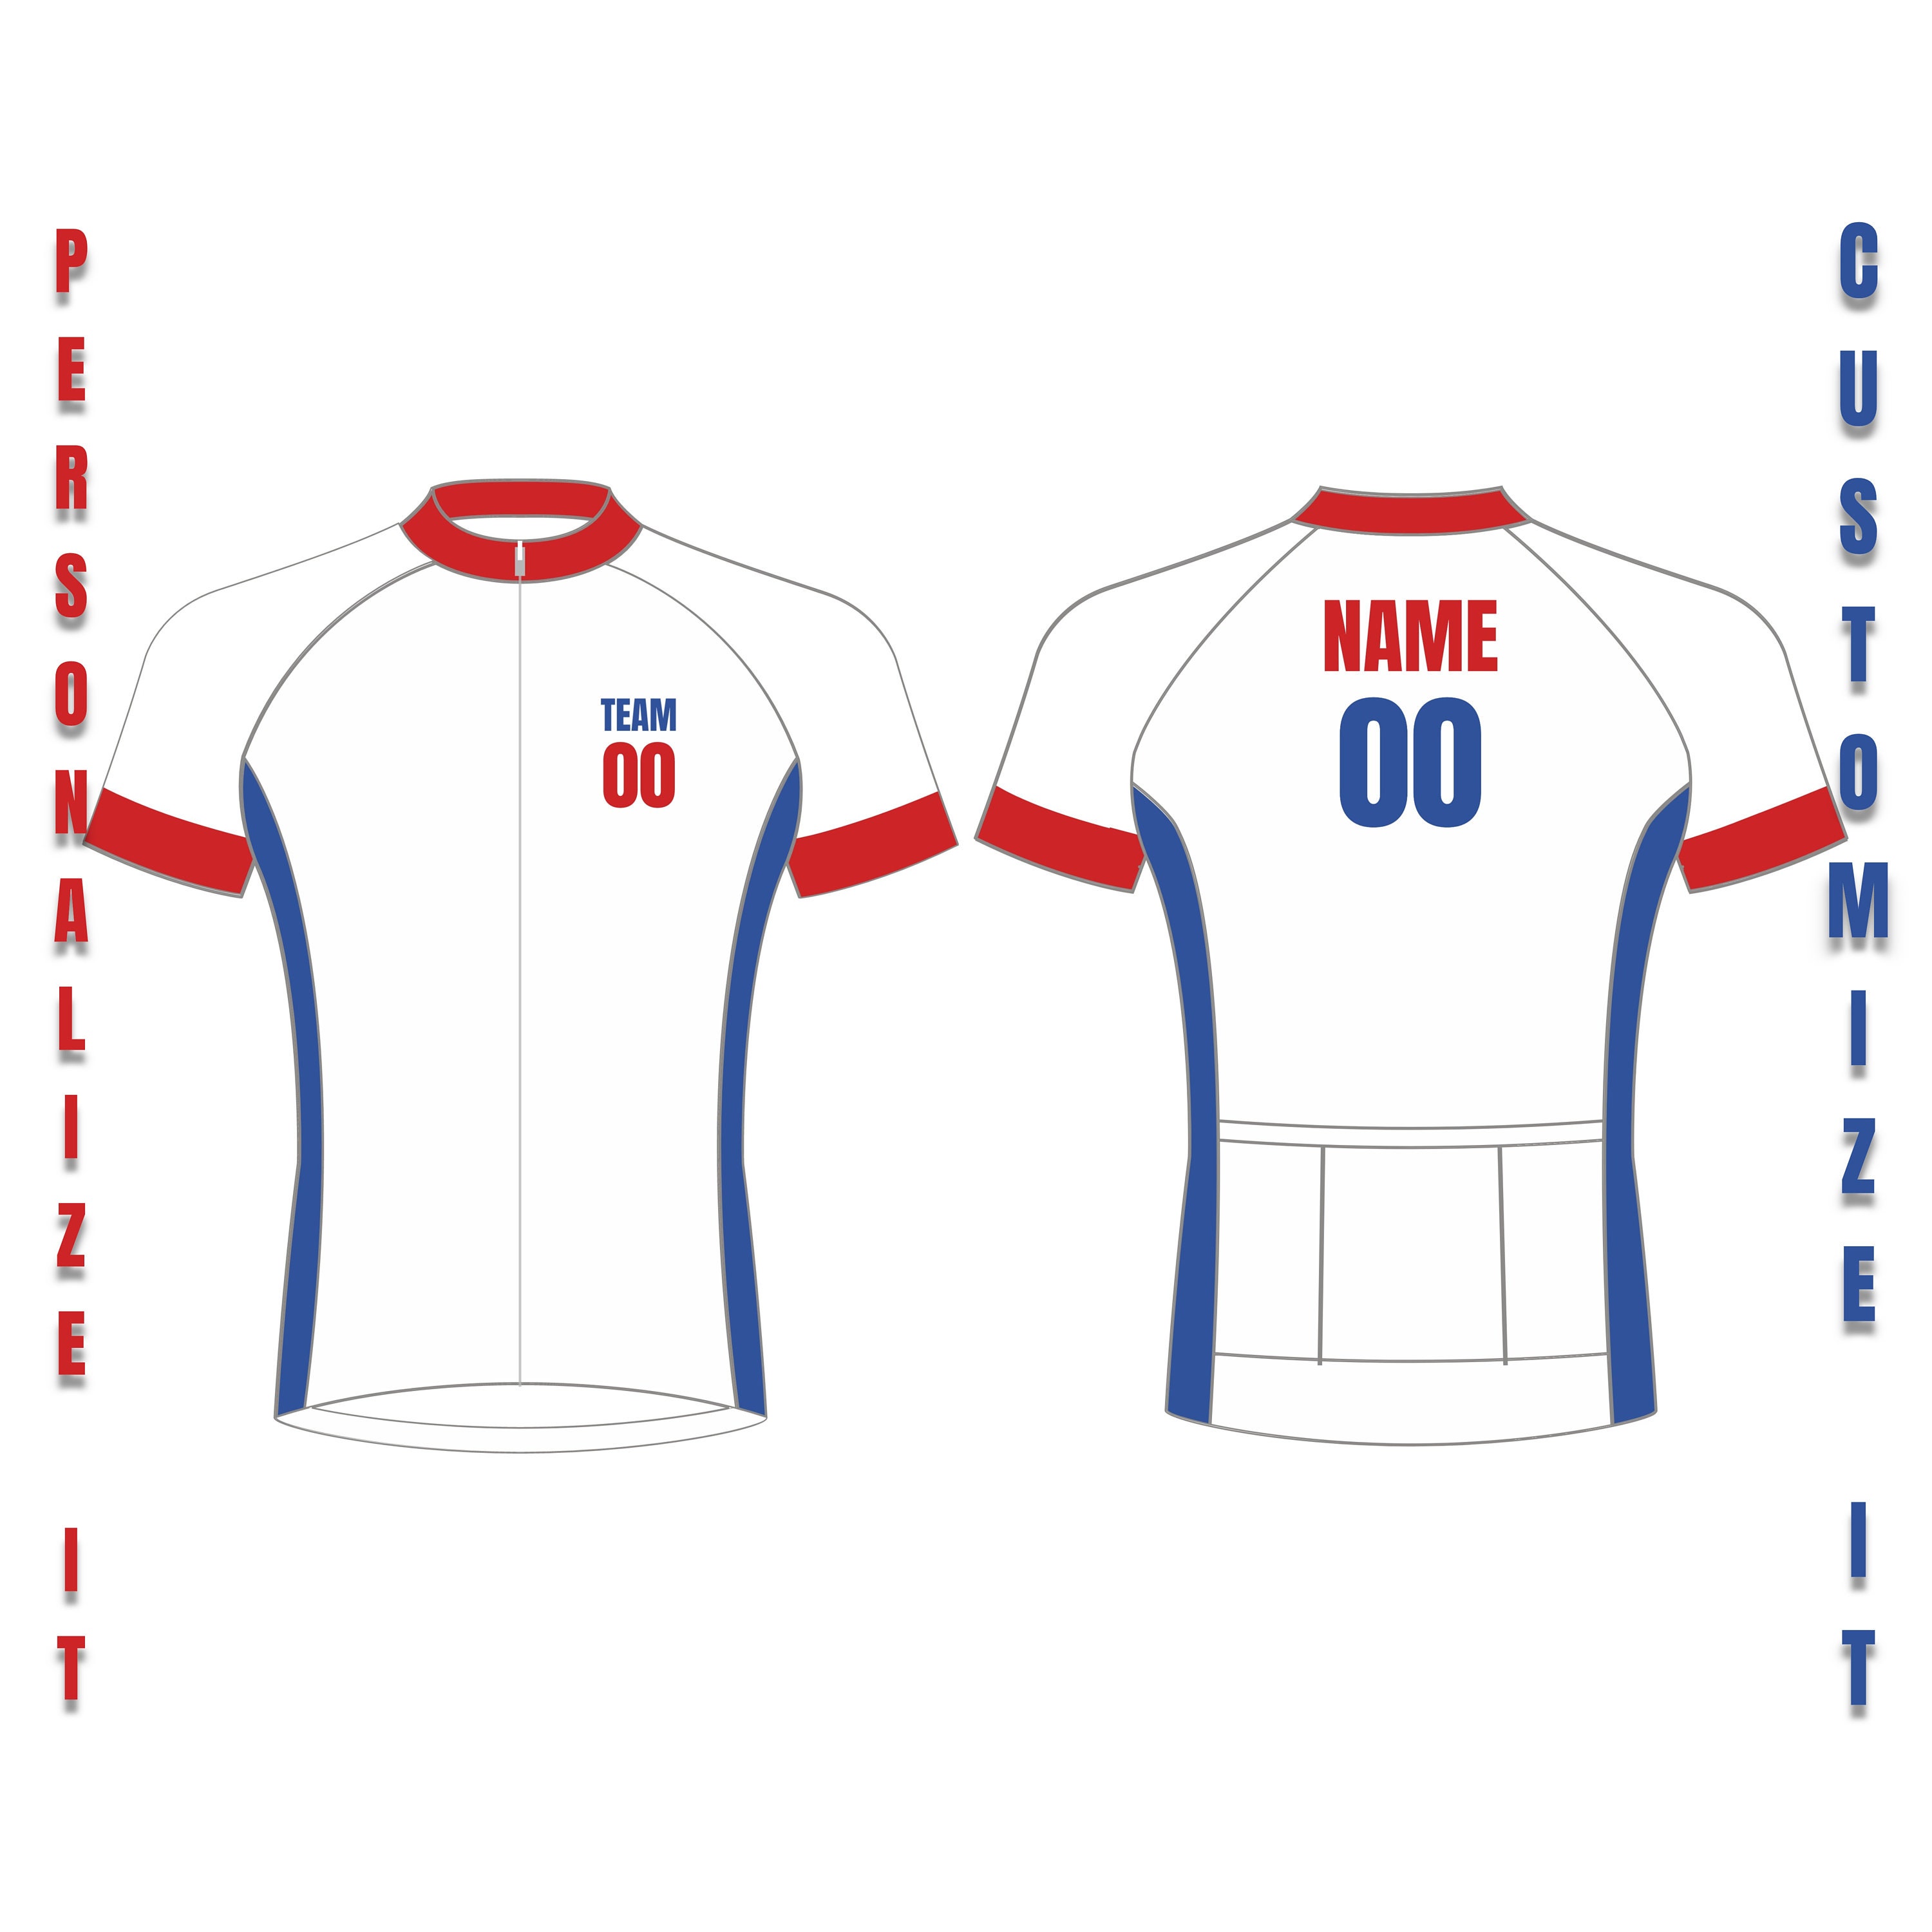  MTB Jersey, Custom Cycling Jersey, Mountain Bike Racing Shirt  for Biker Rider, Biking Shirt UV Protection UPF 30+| JTS491 : Clothing